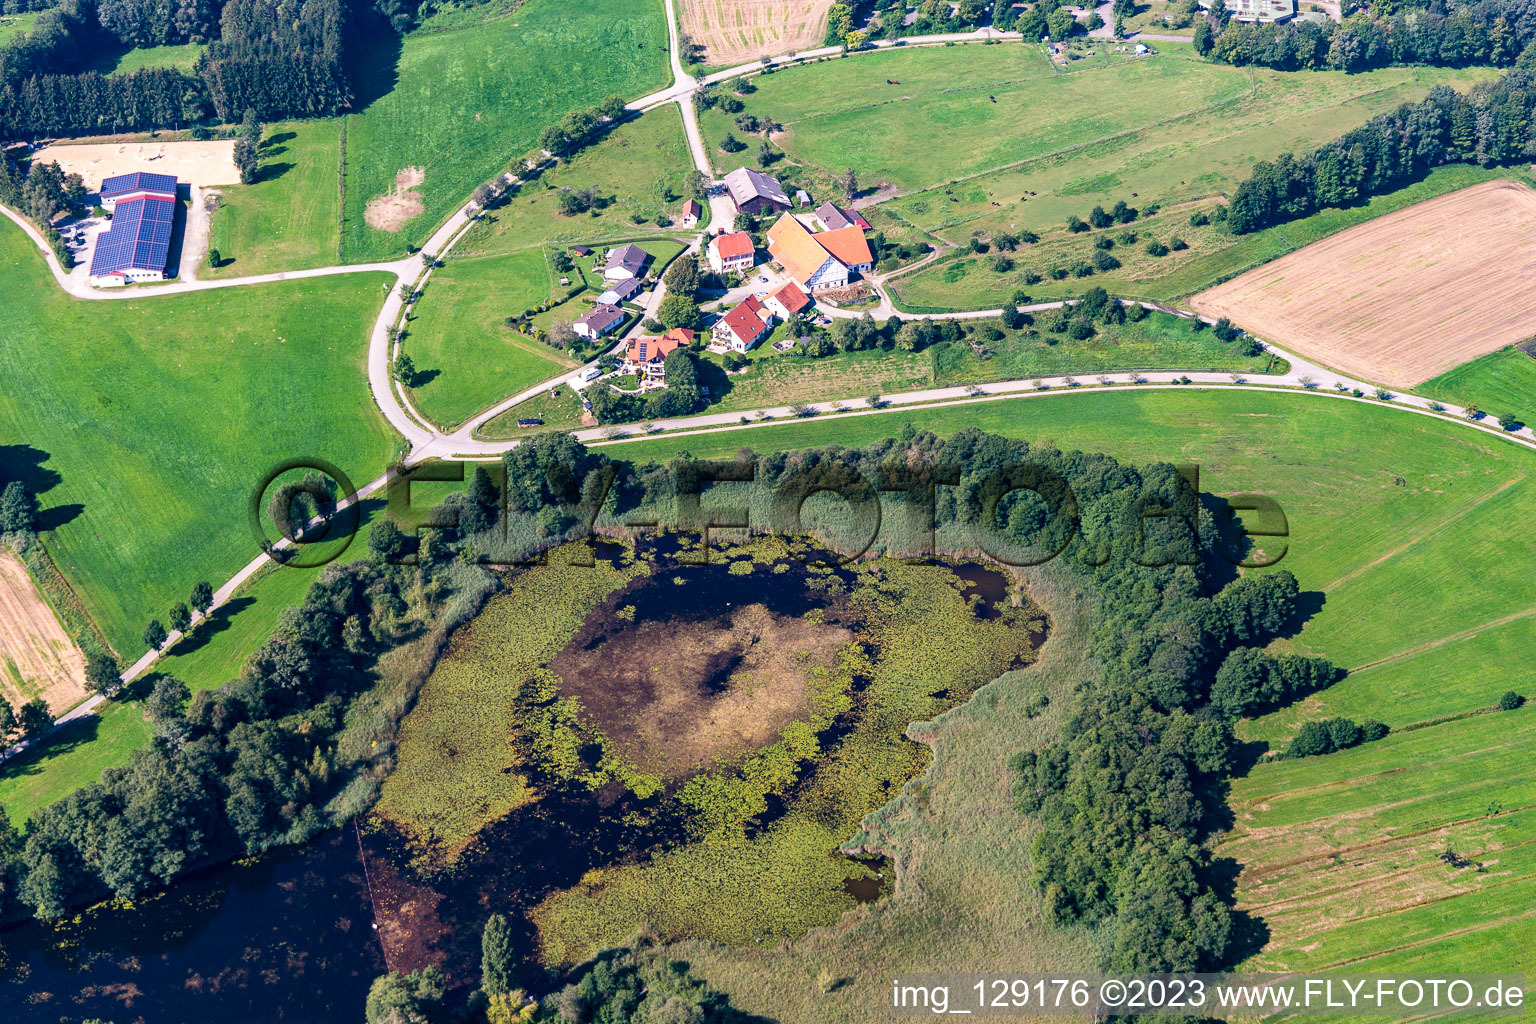 Vue aérienne de Zellersee et Zellerhof à le quartier Zellerhof in Bad Schussenried dans le département Bade-Wurtemberg, Allemagne